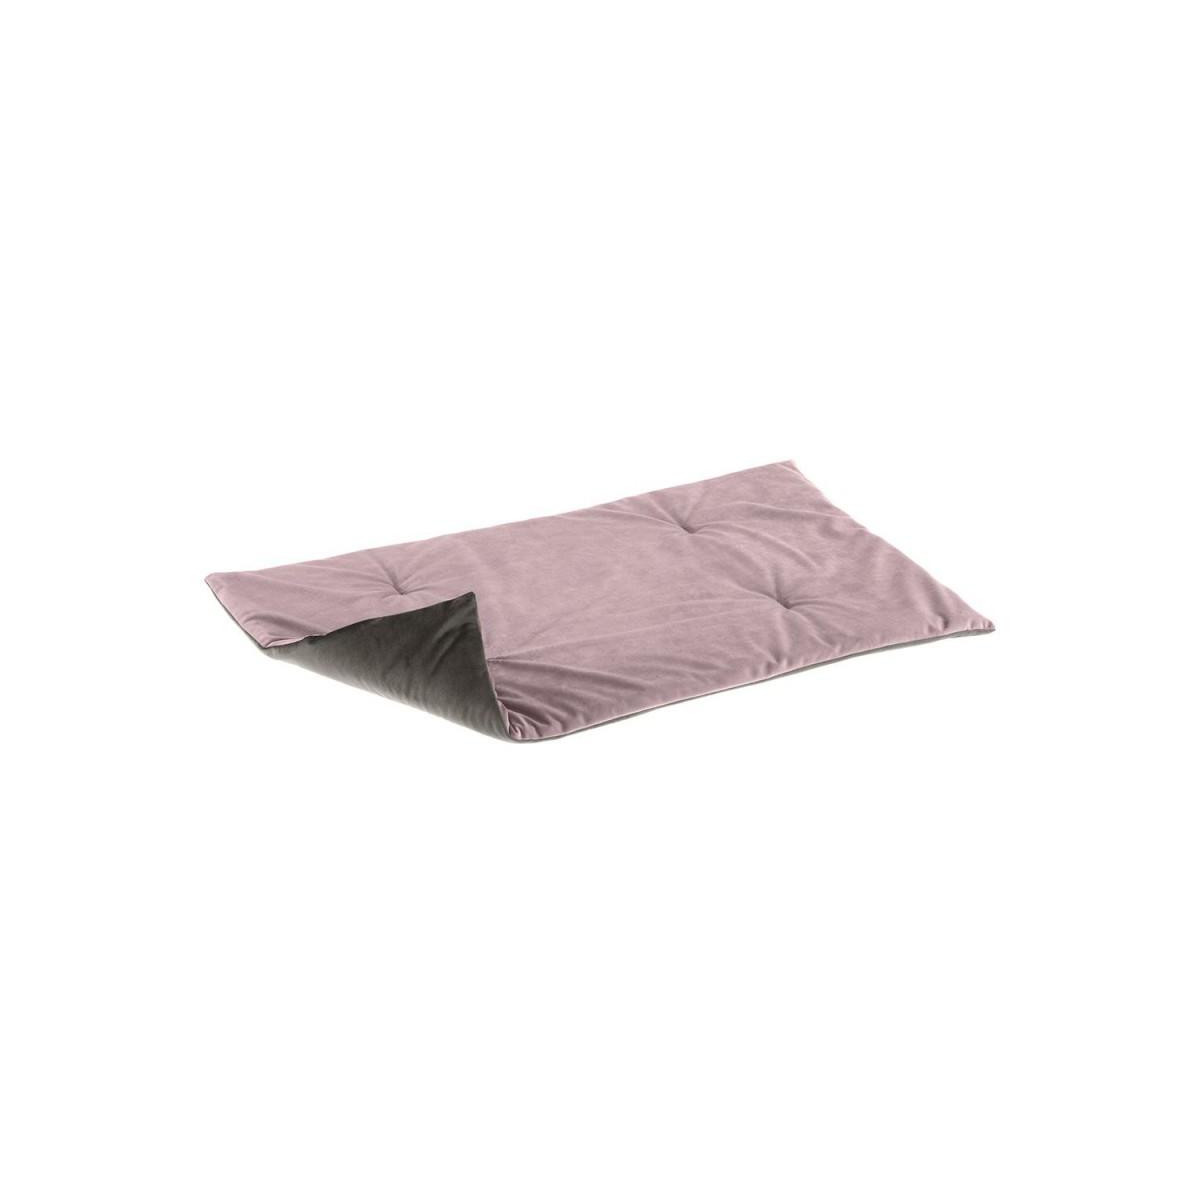 Ferplast Baron 65 Blanket Purple-Grey (83416503) - зображення 1